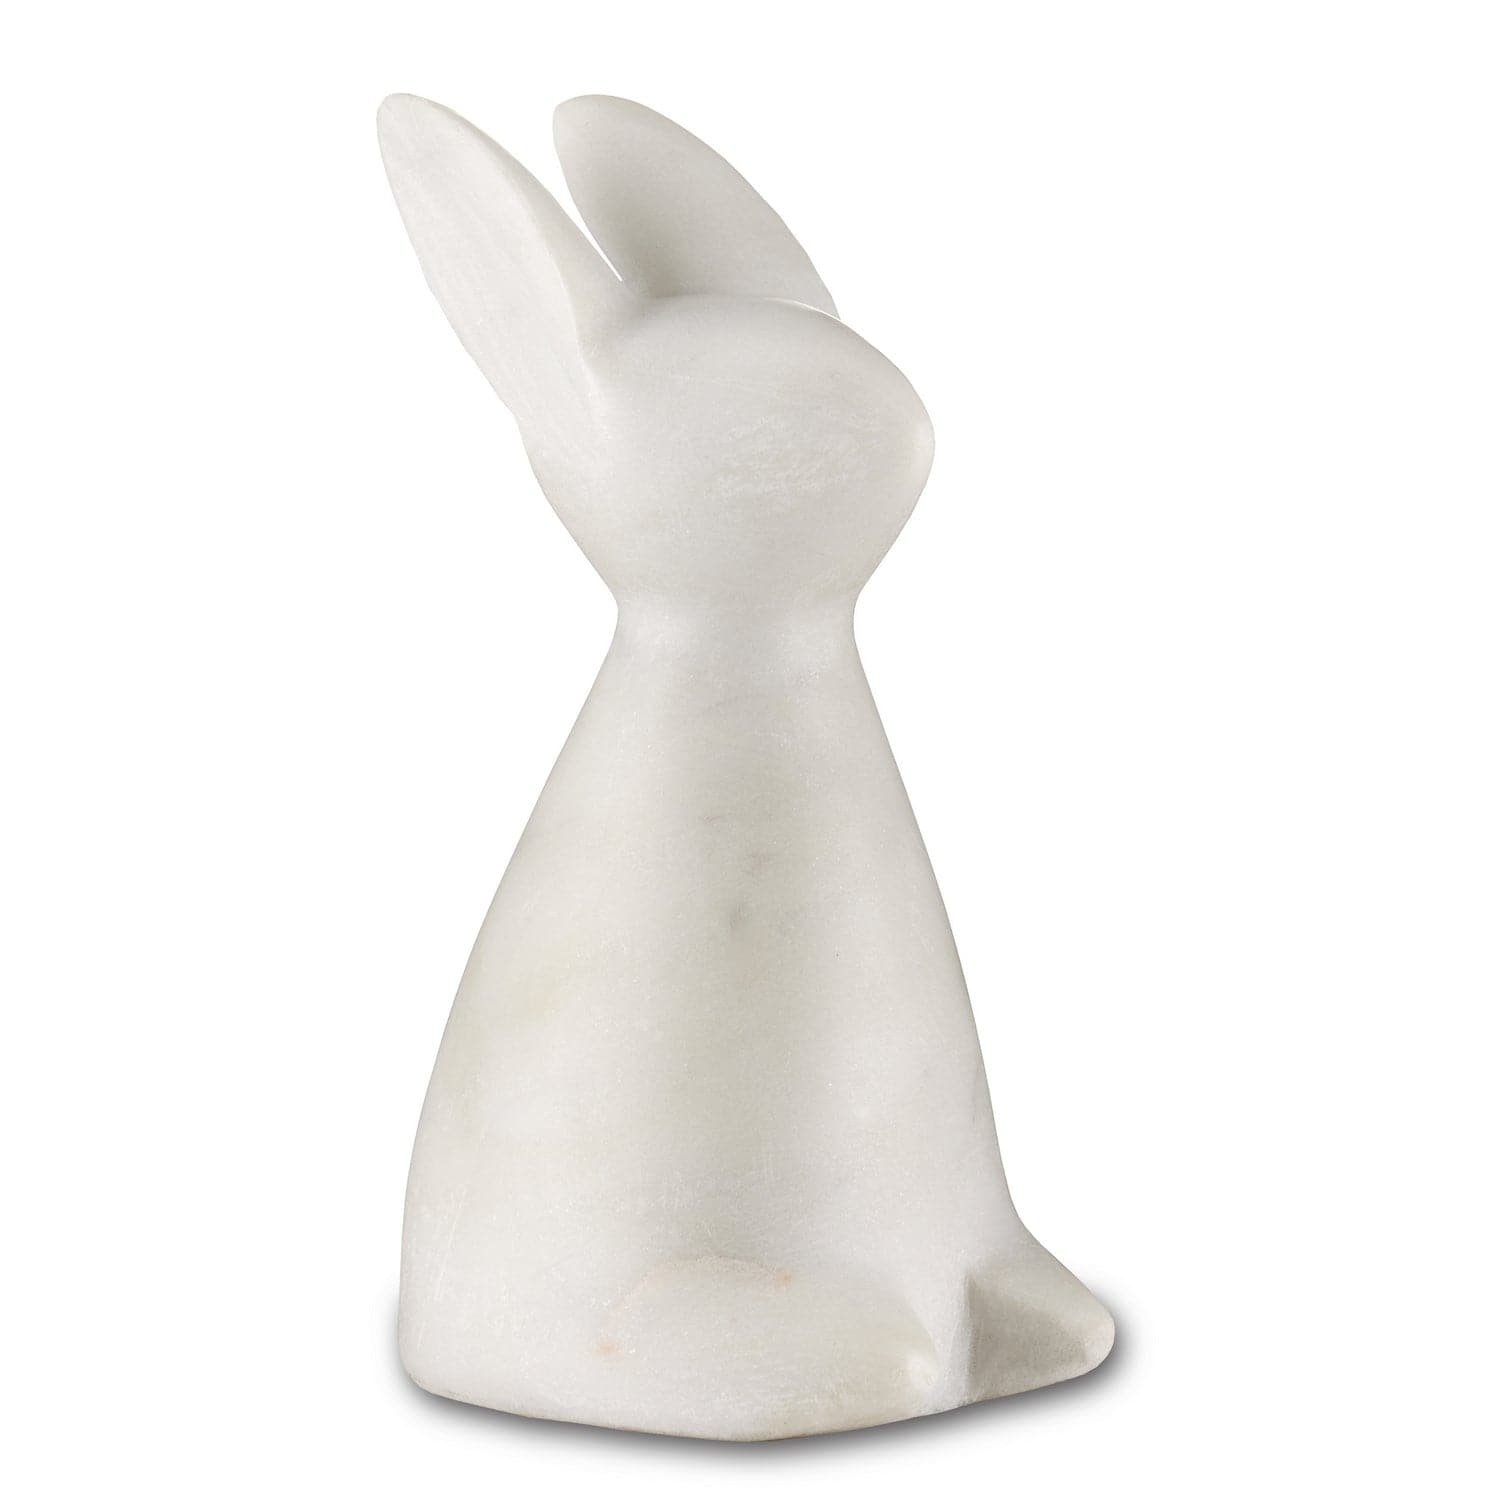 Rabbit in White finish